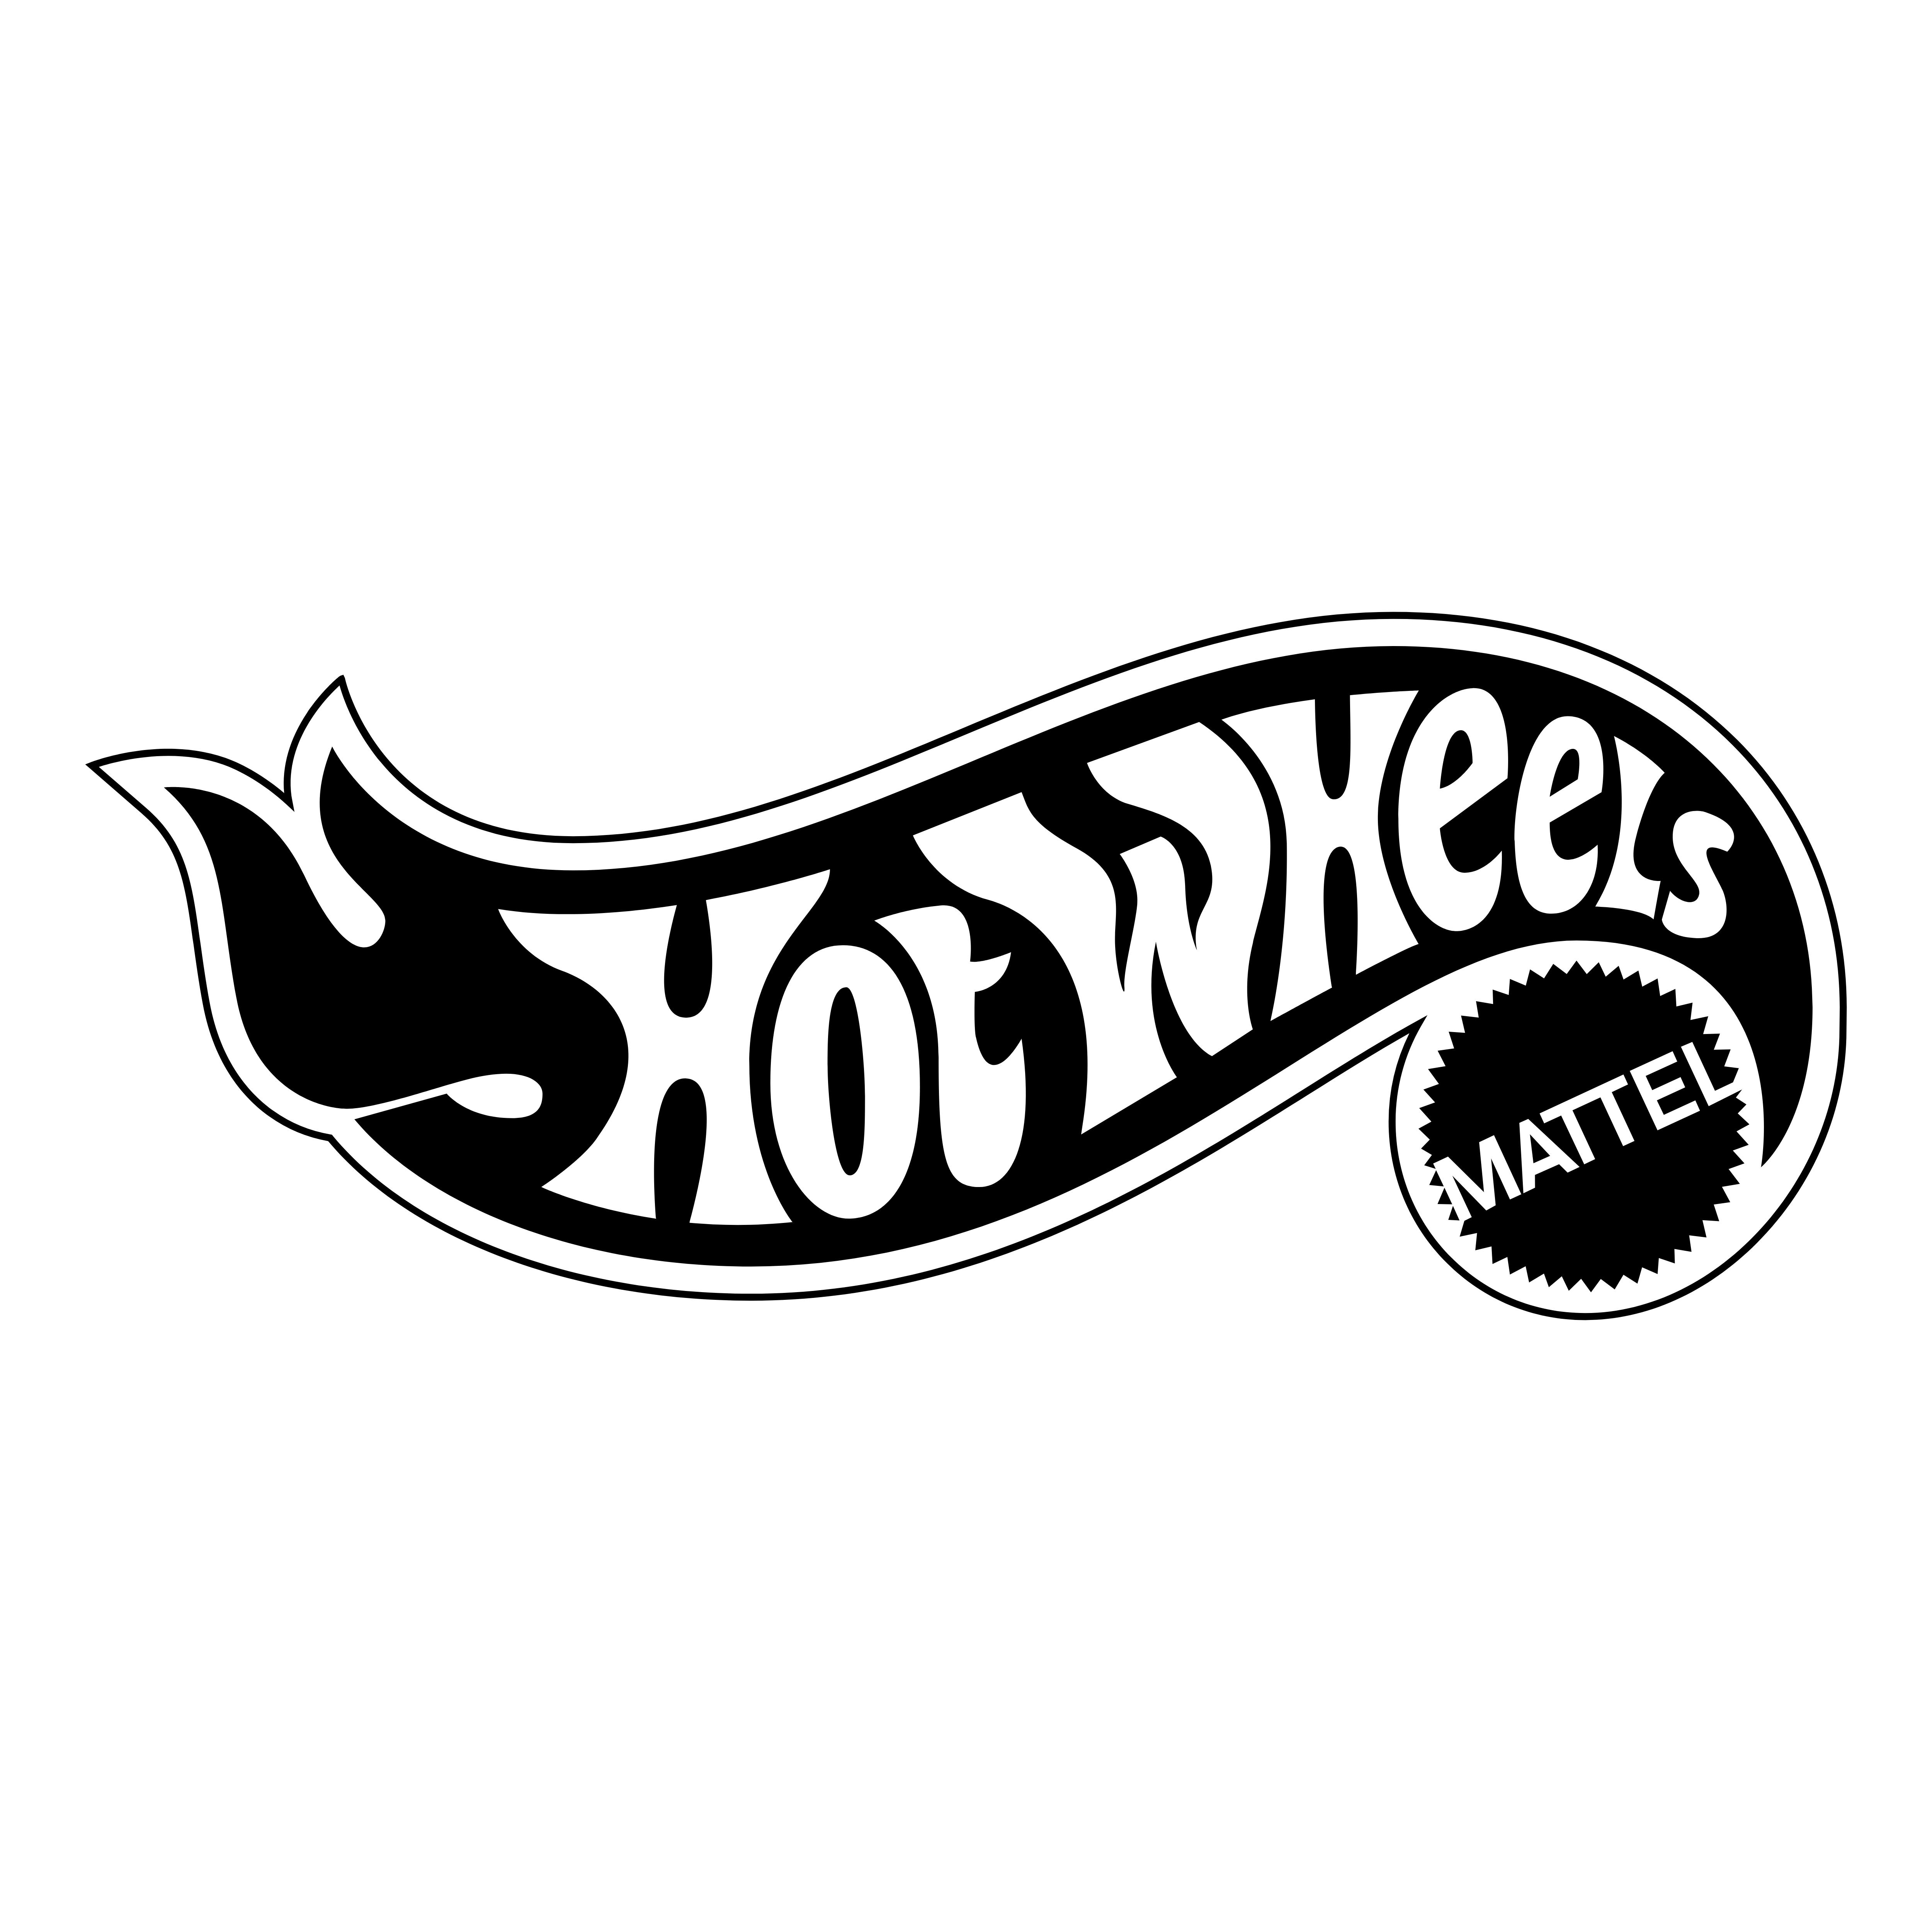 Hot Wheels - Logos Download